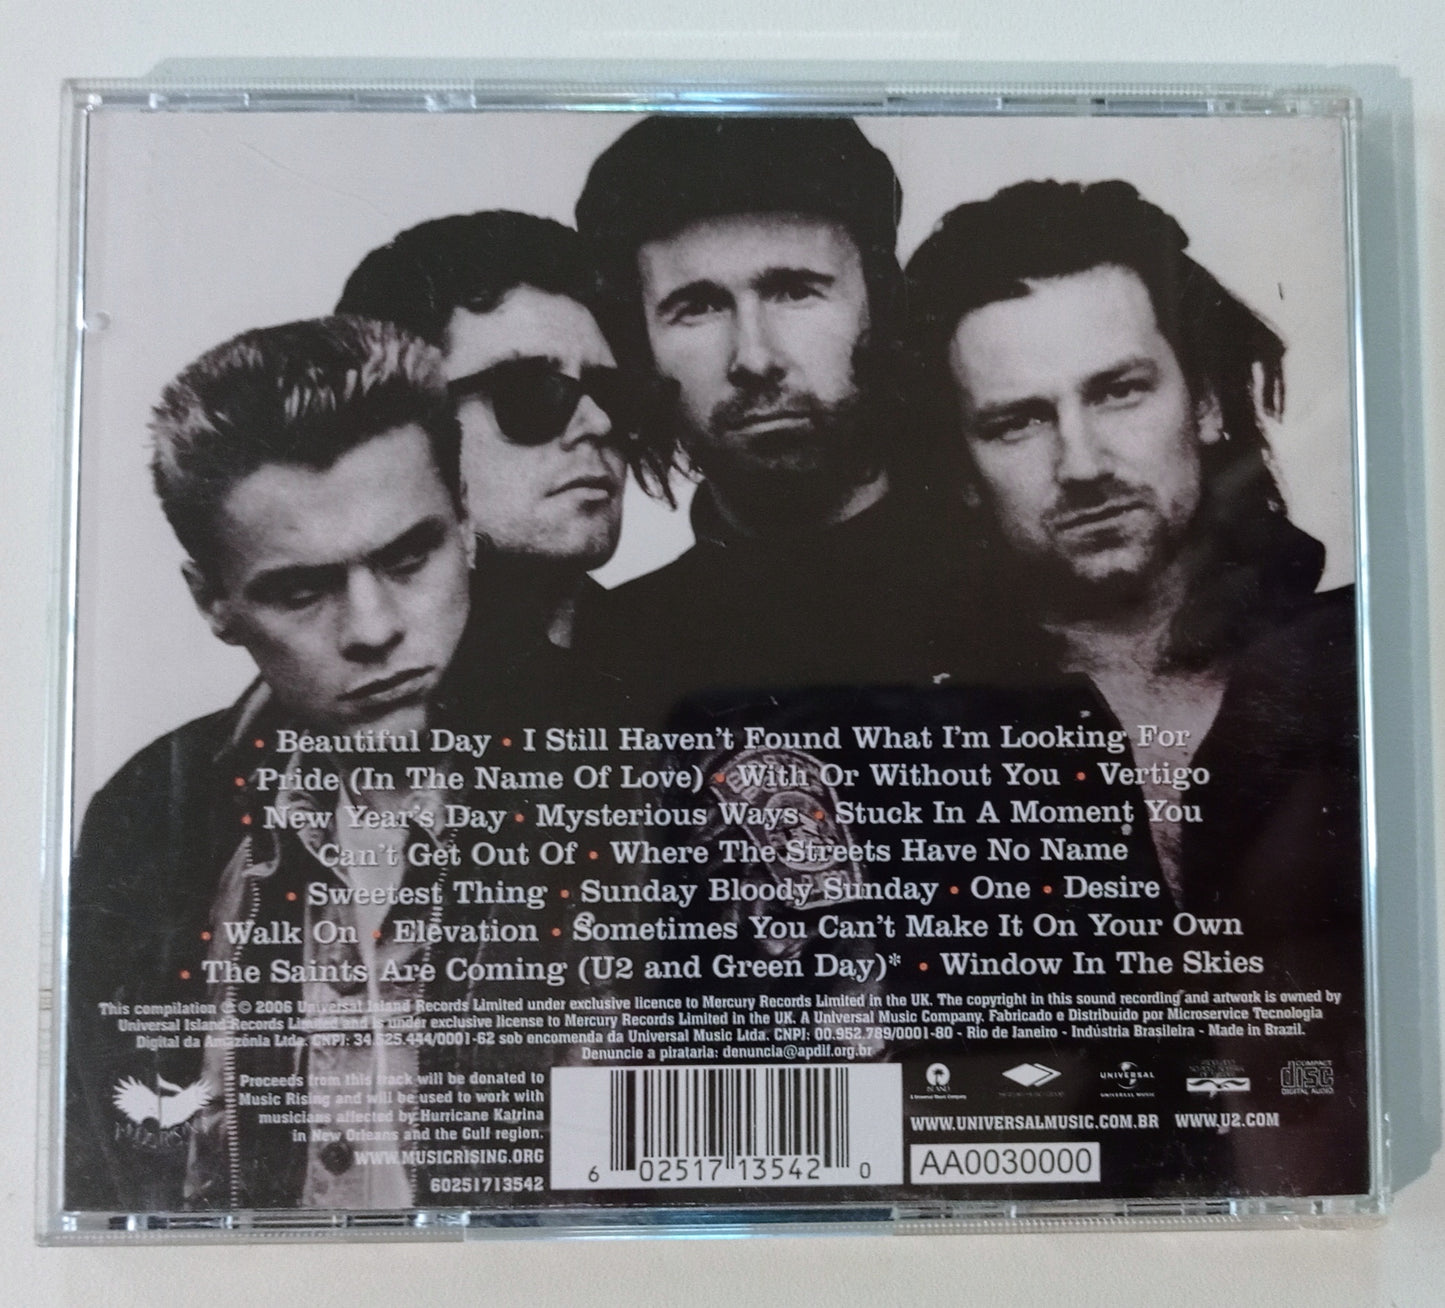 U2 - U218 Singles (CD Nacional - usado)